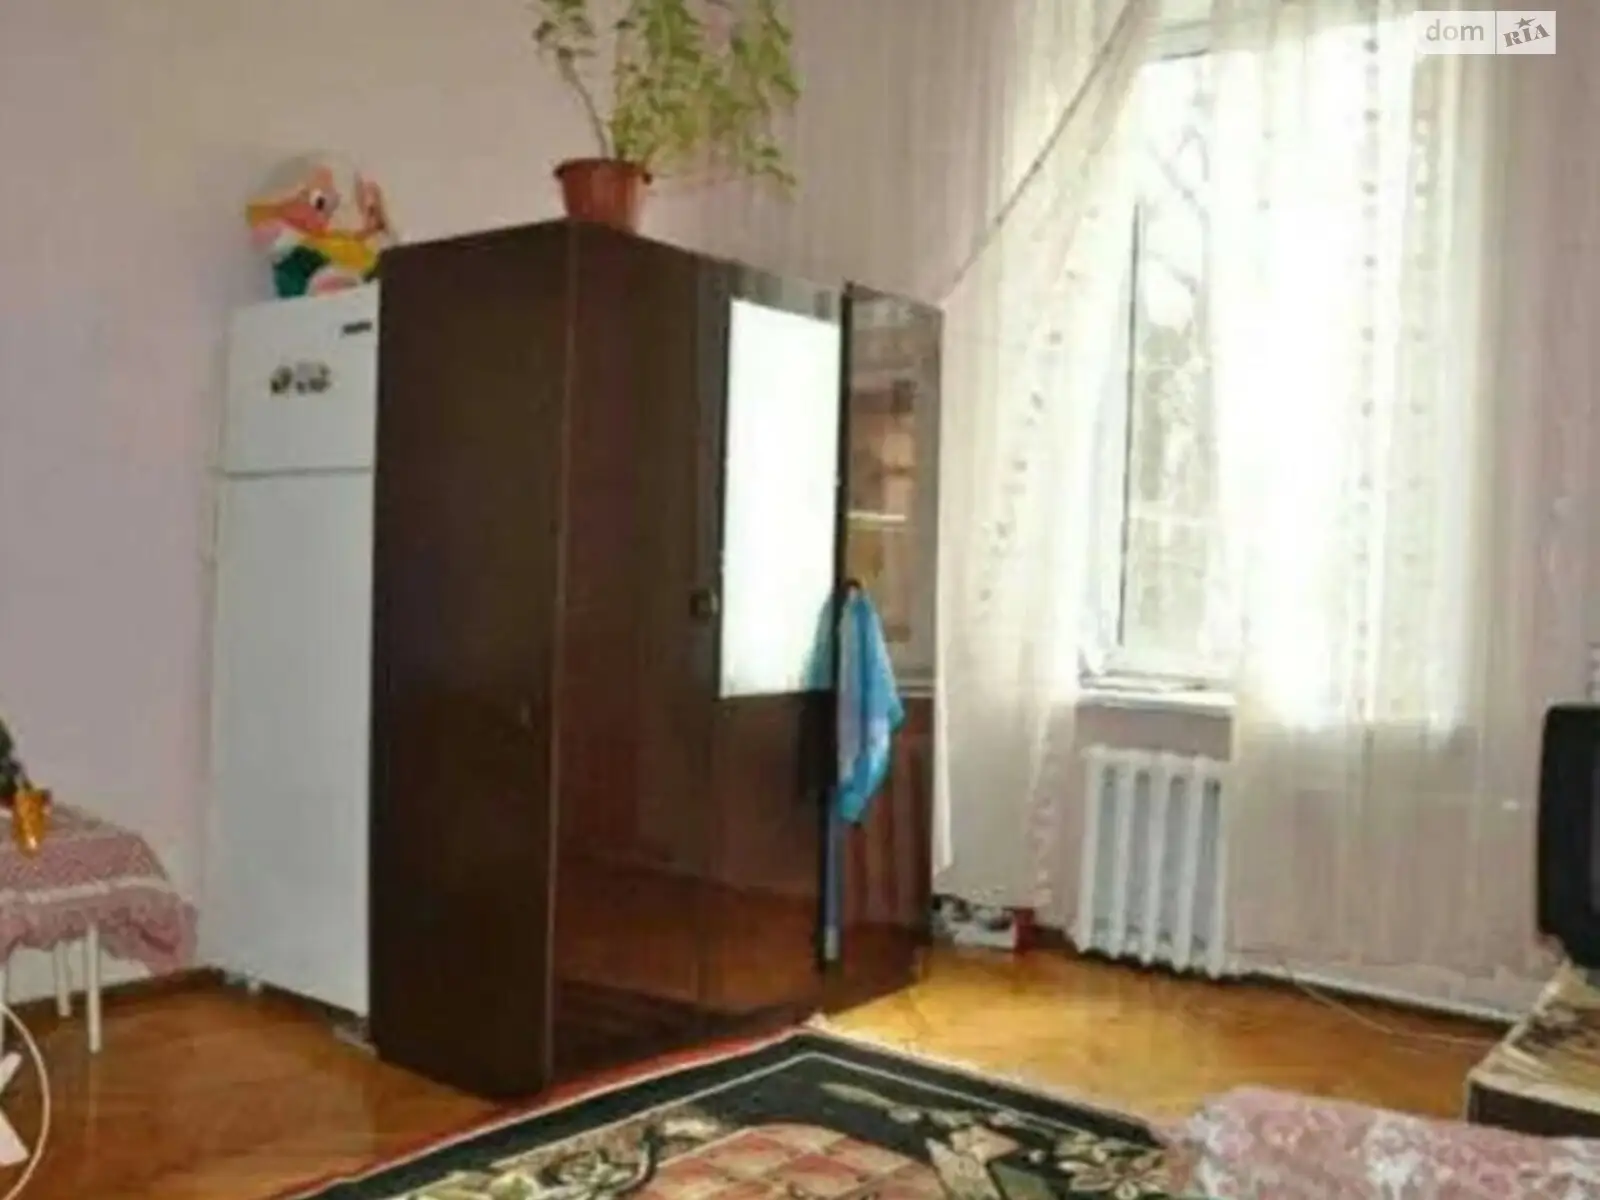 Продается комната 15 кв. м в Одессе, цена: 12500 $ - фото 1